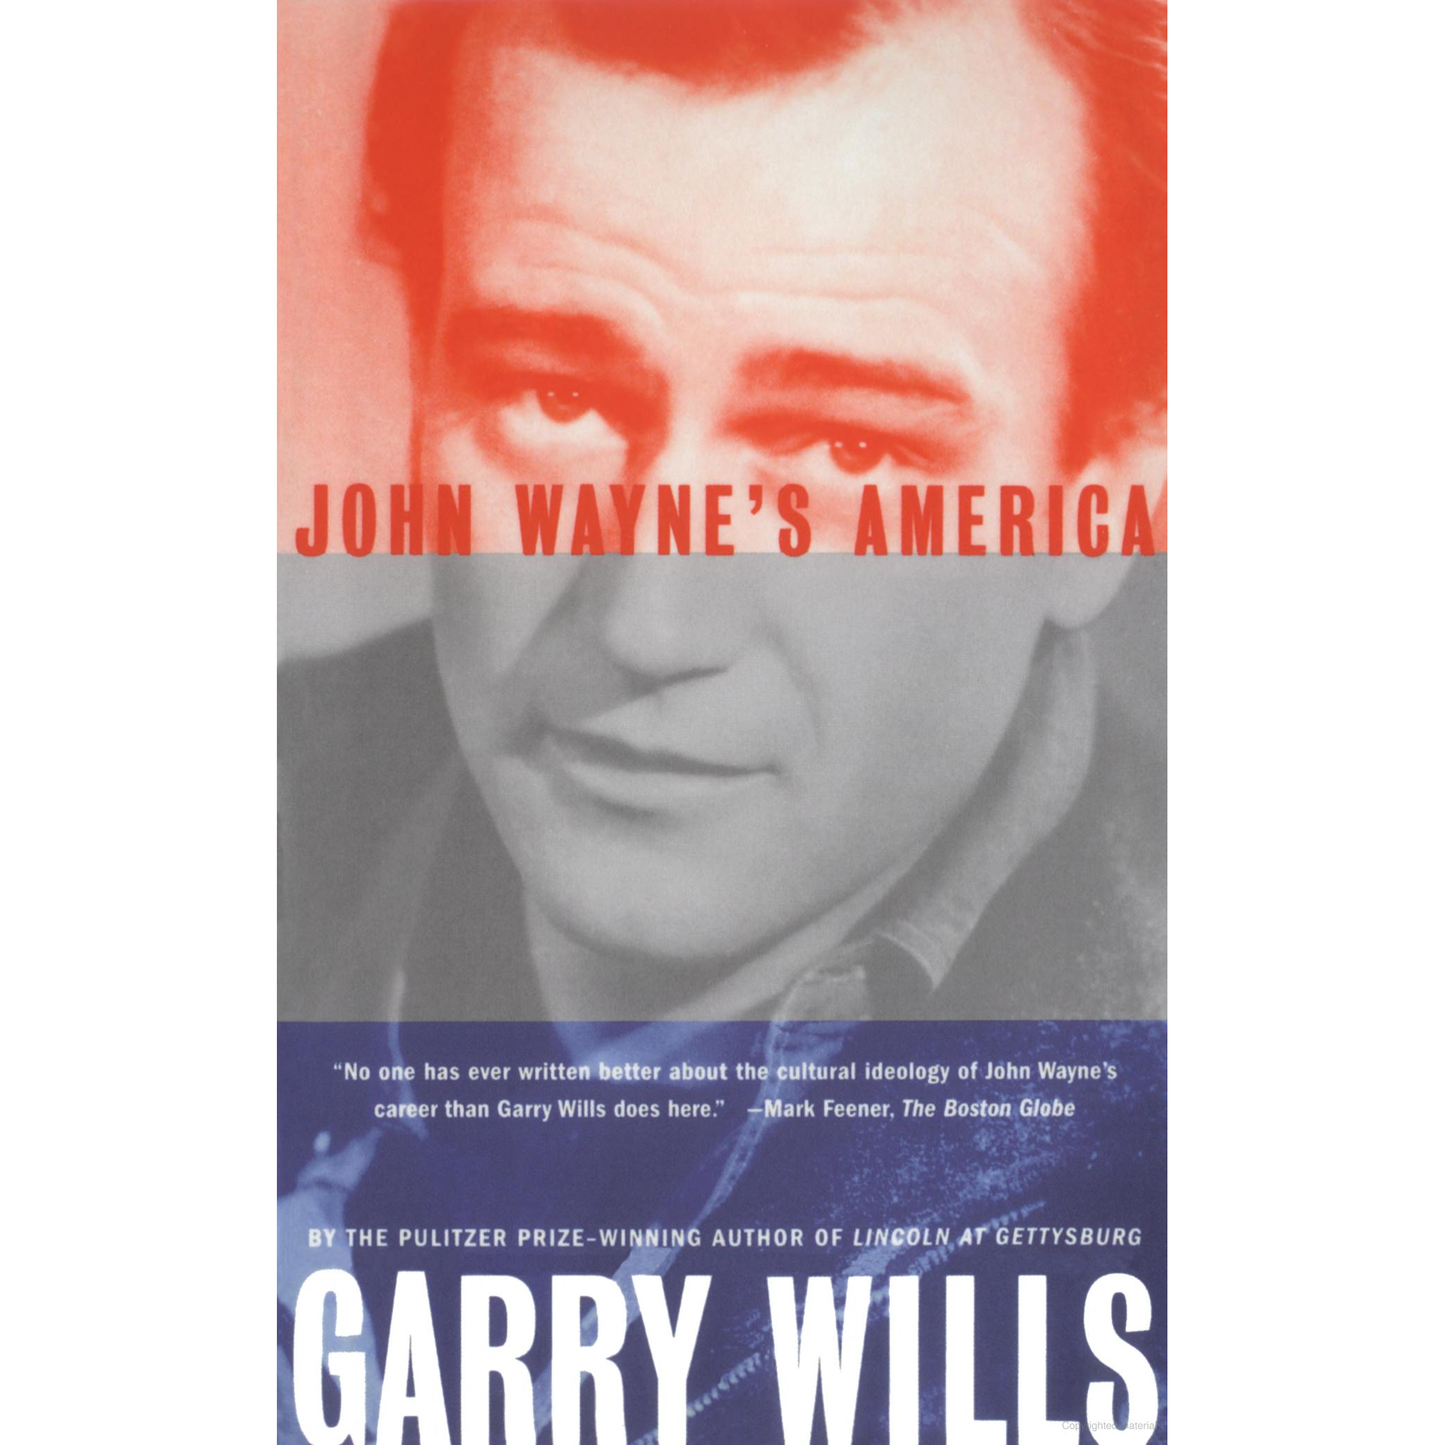 John Wayne's America by Garry Willis